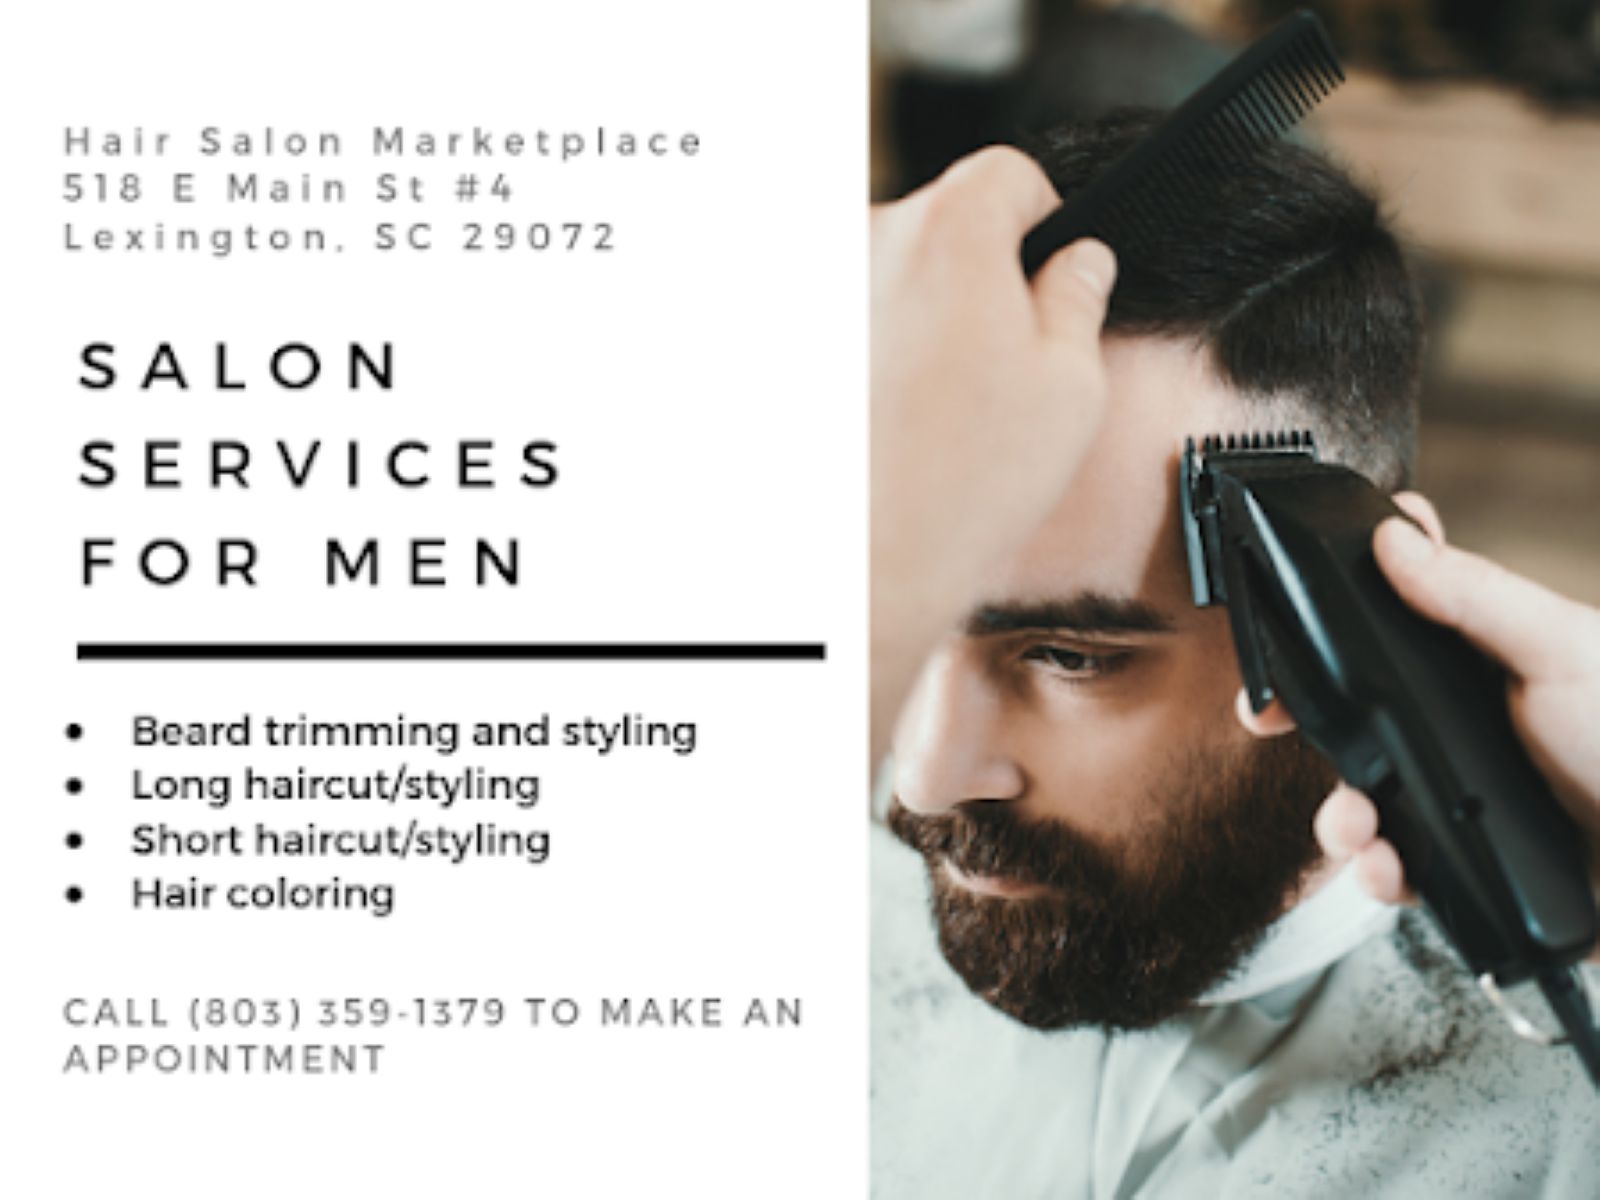 Hair Salon Marketplace Photo